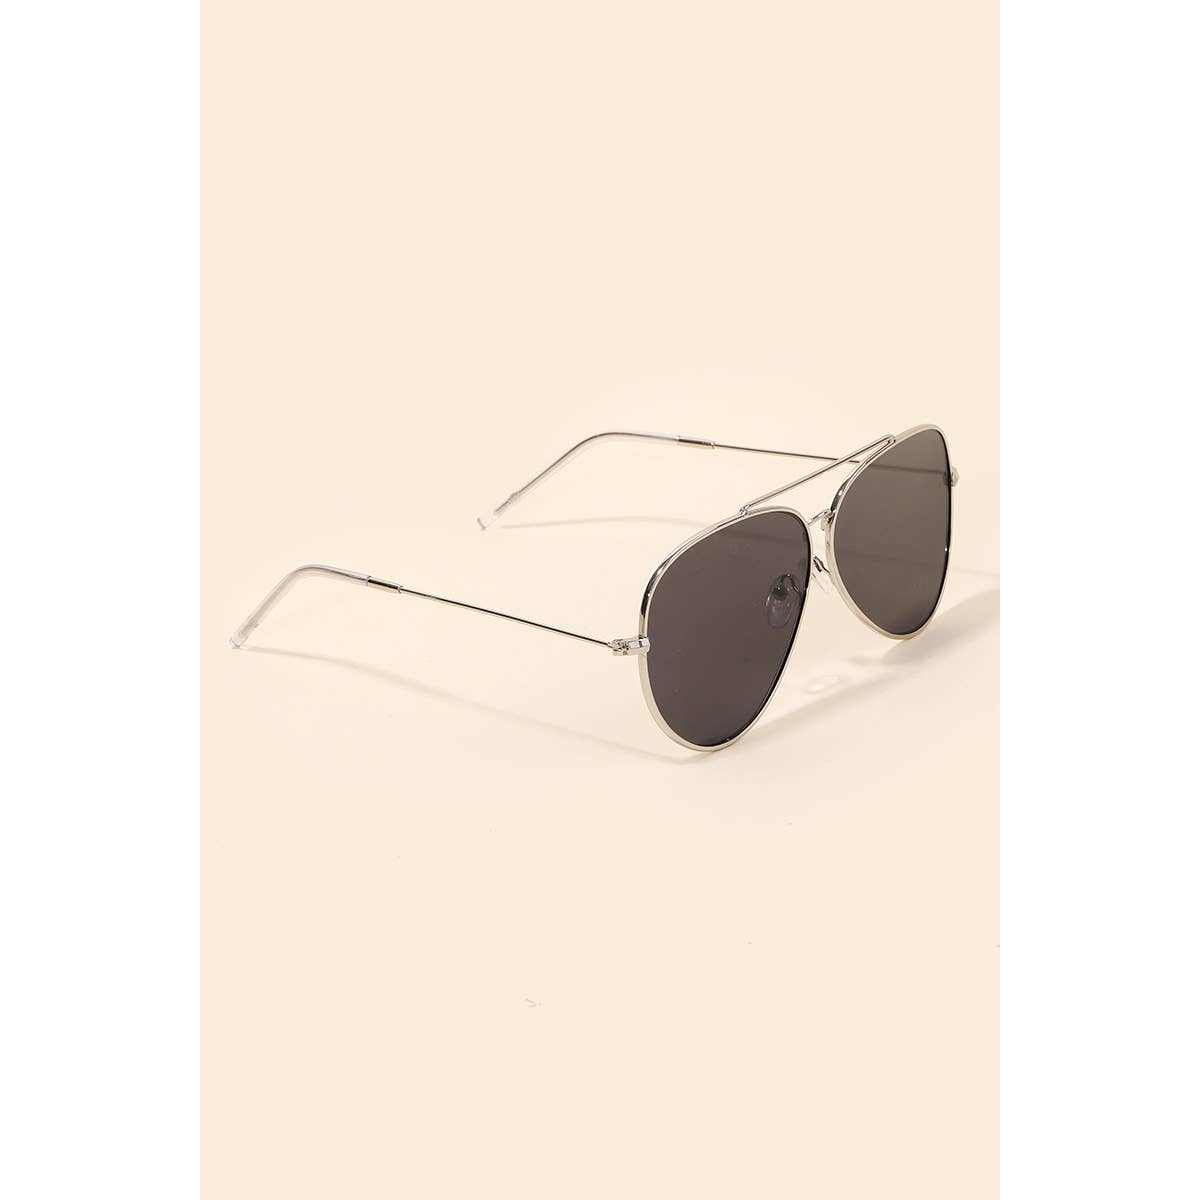 Anarchy Street - Reverse Lens Aviator Sunglasses: Assorted